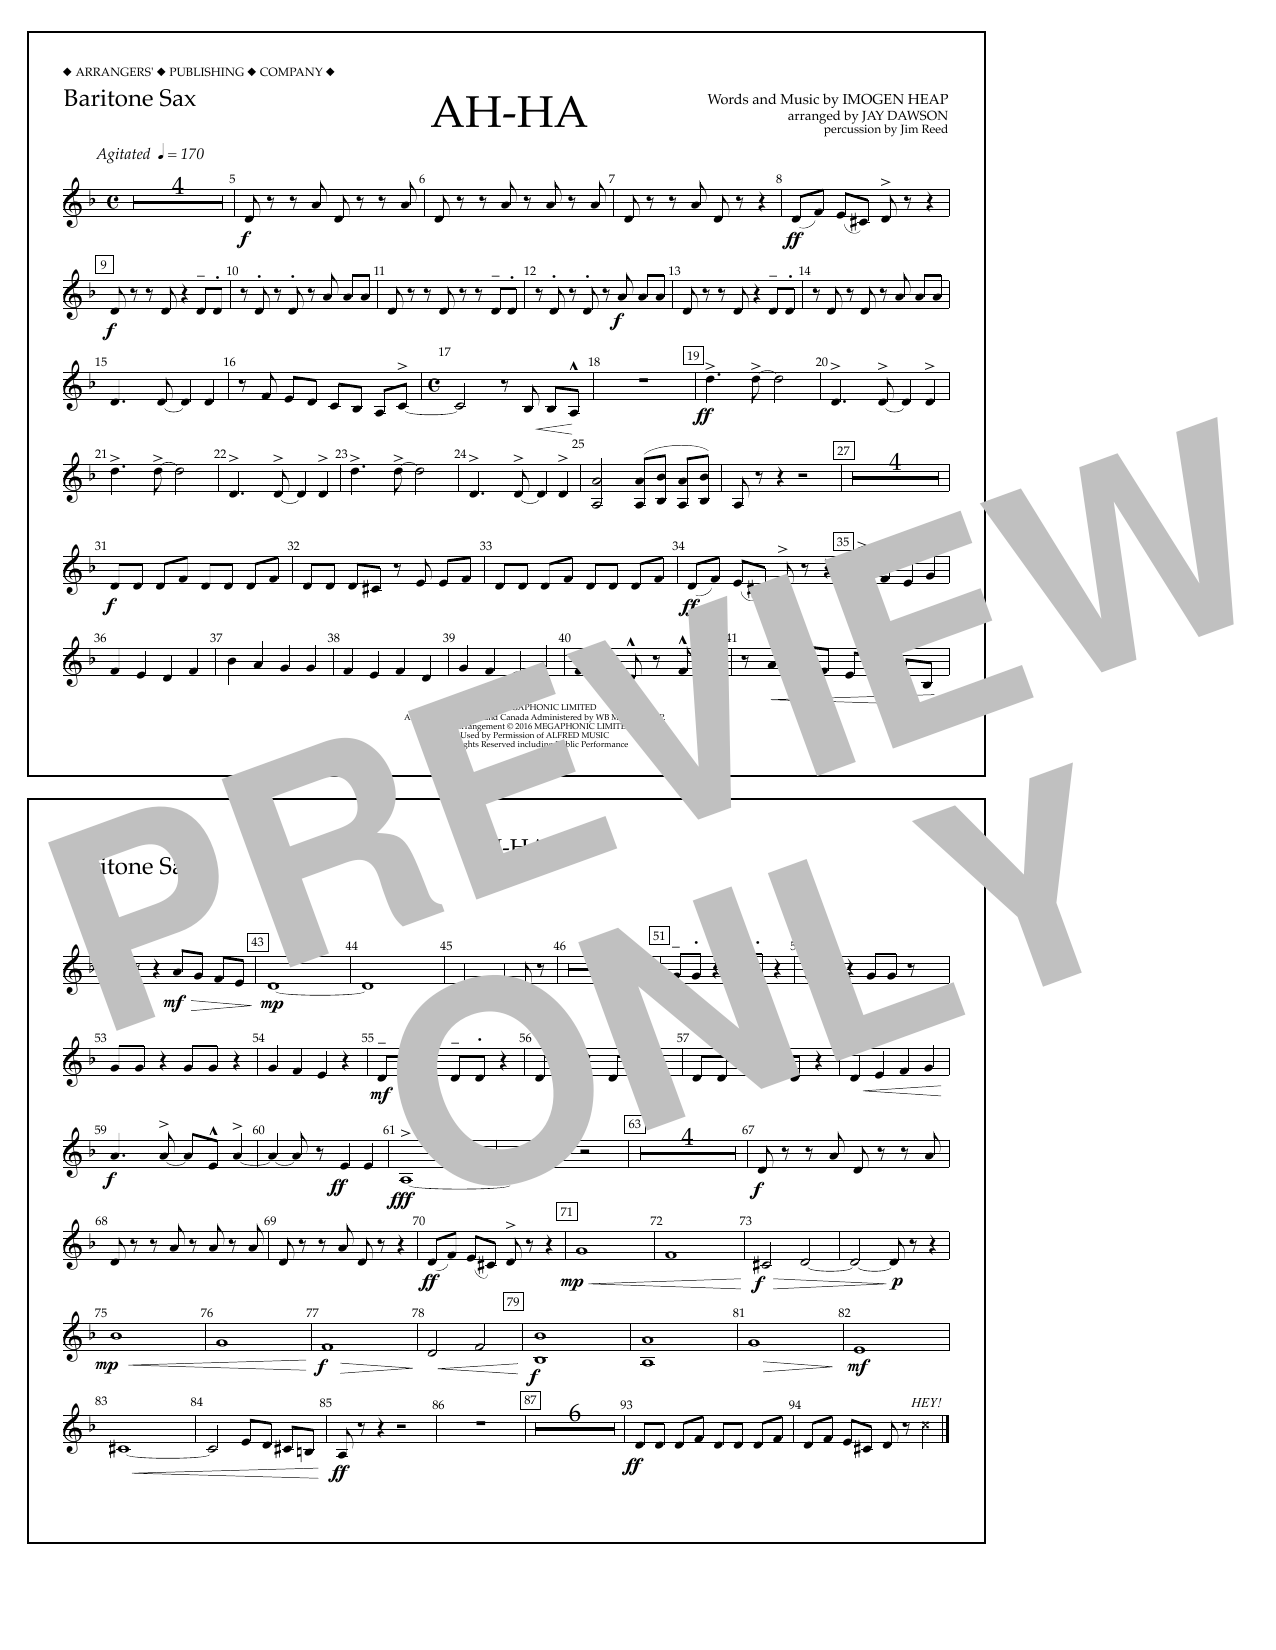 Jay Dawson Ah-ha - Baritone Sax Sheet Music Notes & Chords for Marching Band - Download or Print PDF